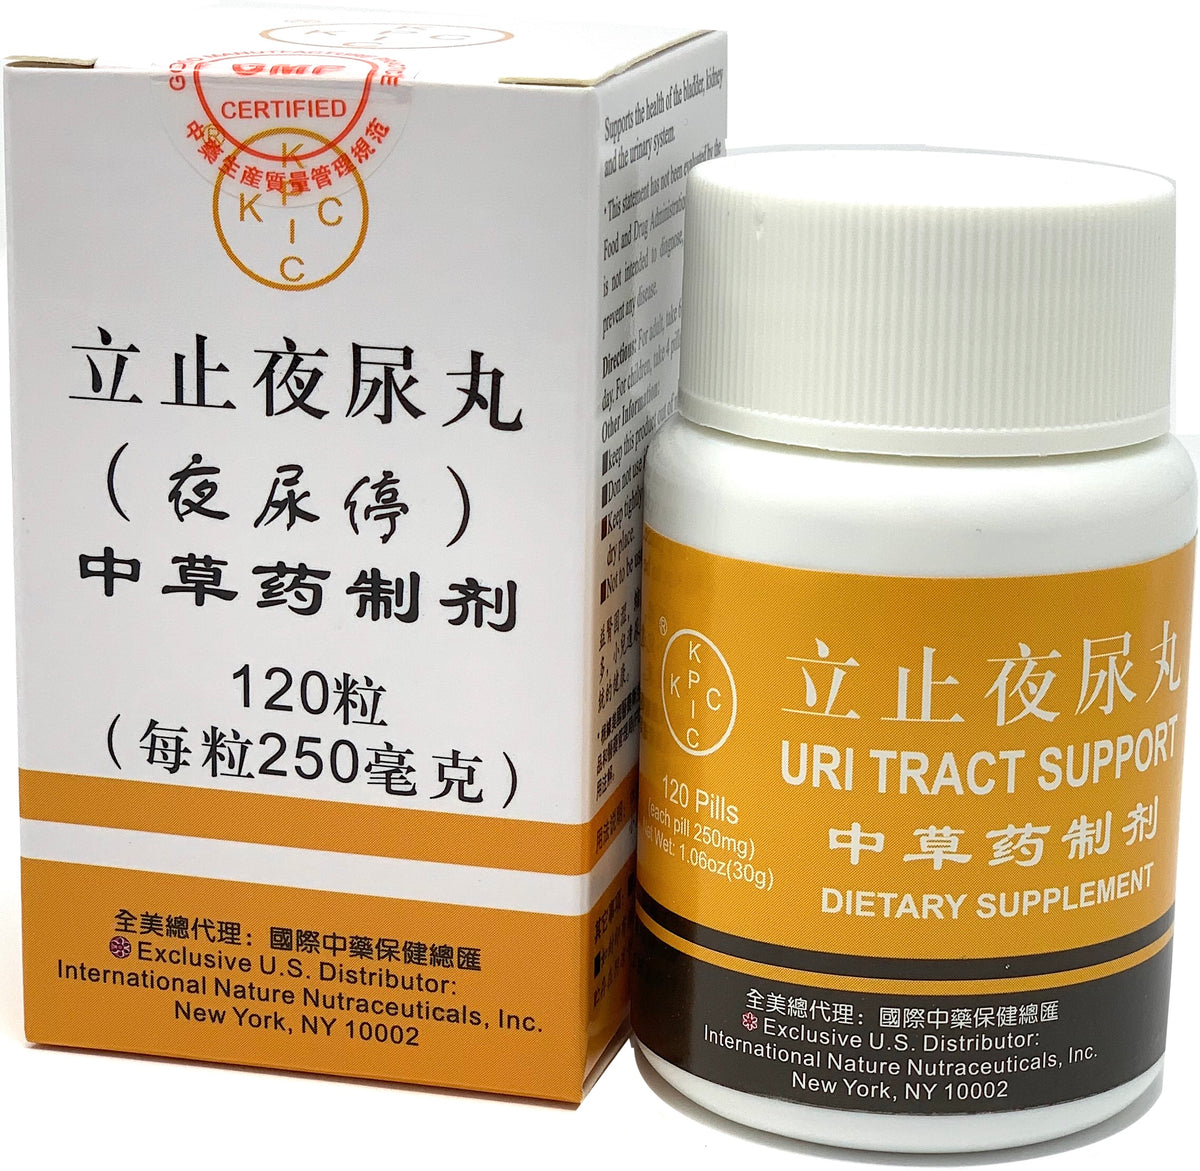 Uri Tract Support (Ye Niao Ting)